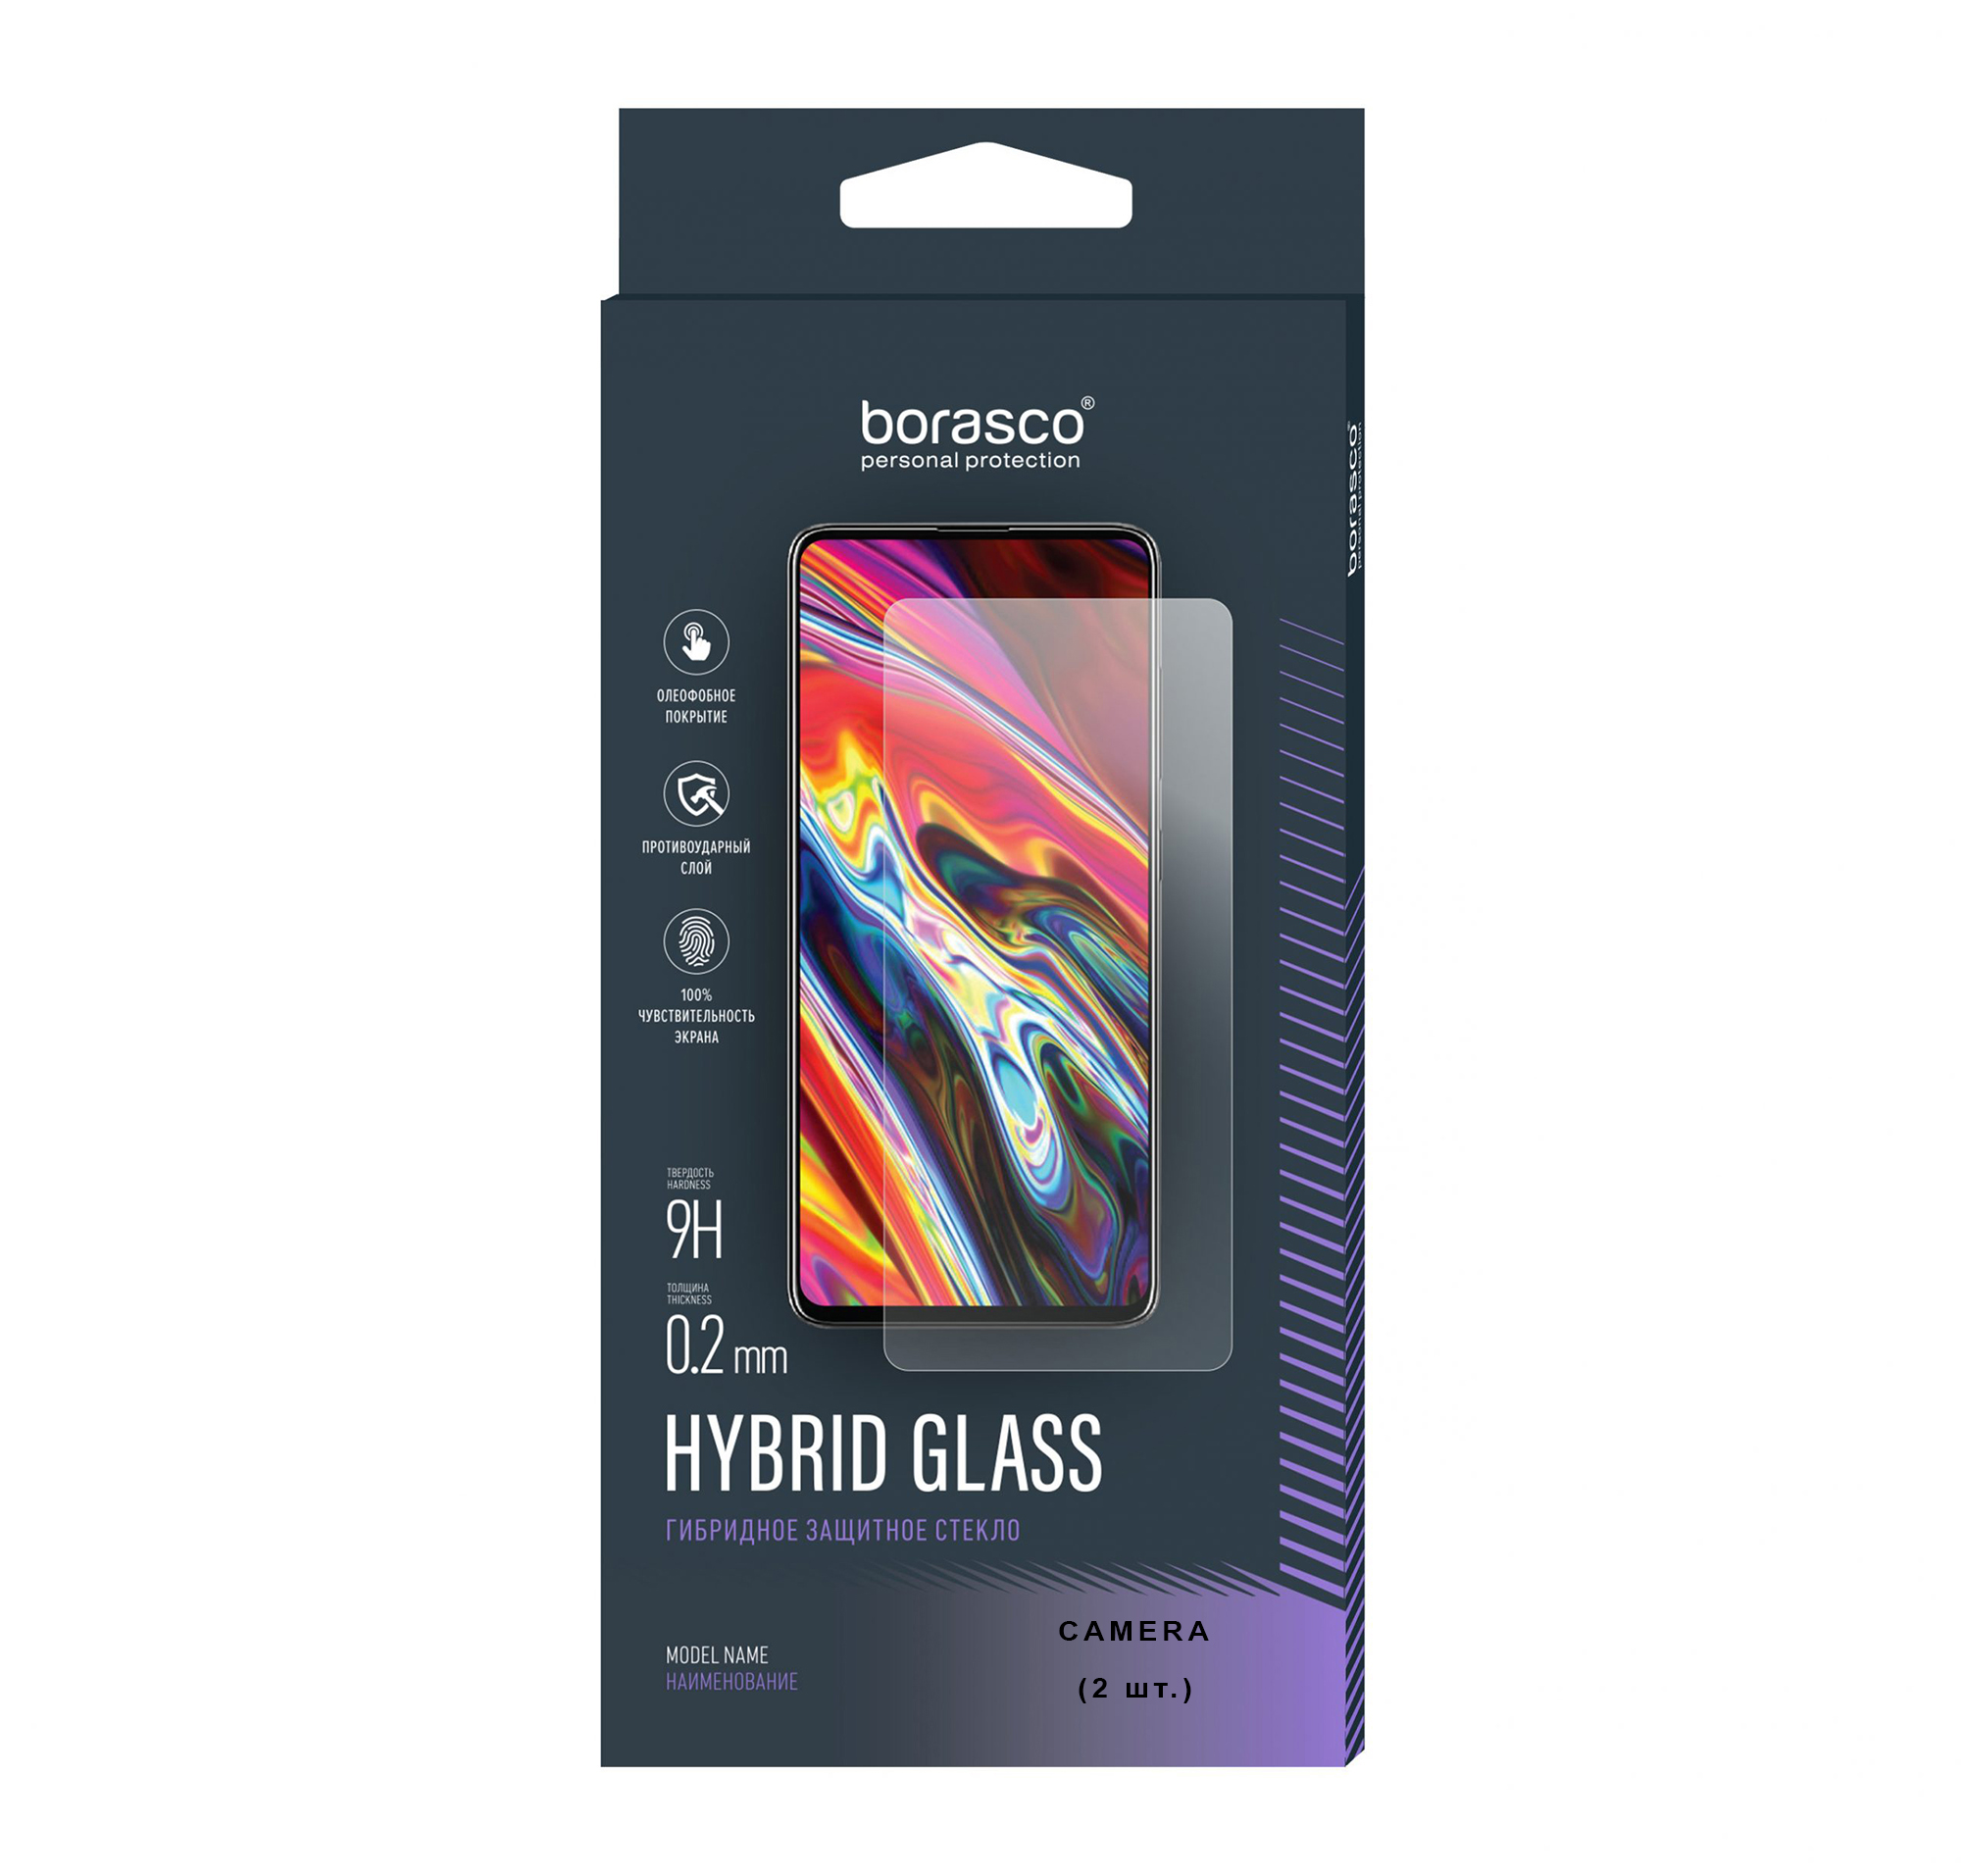 Защитное стекло (Экран+Камера) Hybrid Glass для Huawei P40 lite защитное стекло для камеры hybrid glass для huawei p30 lite